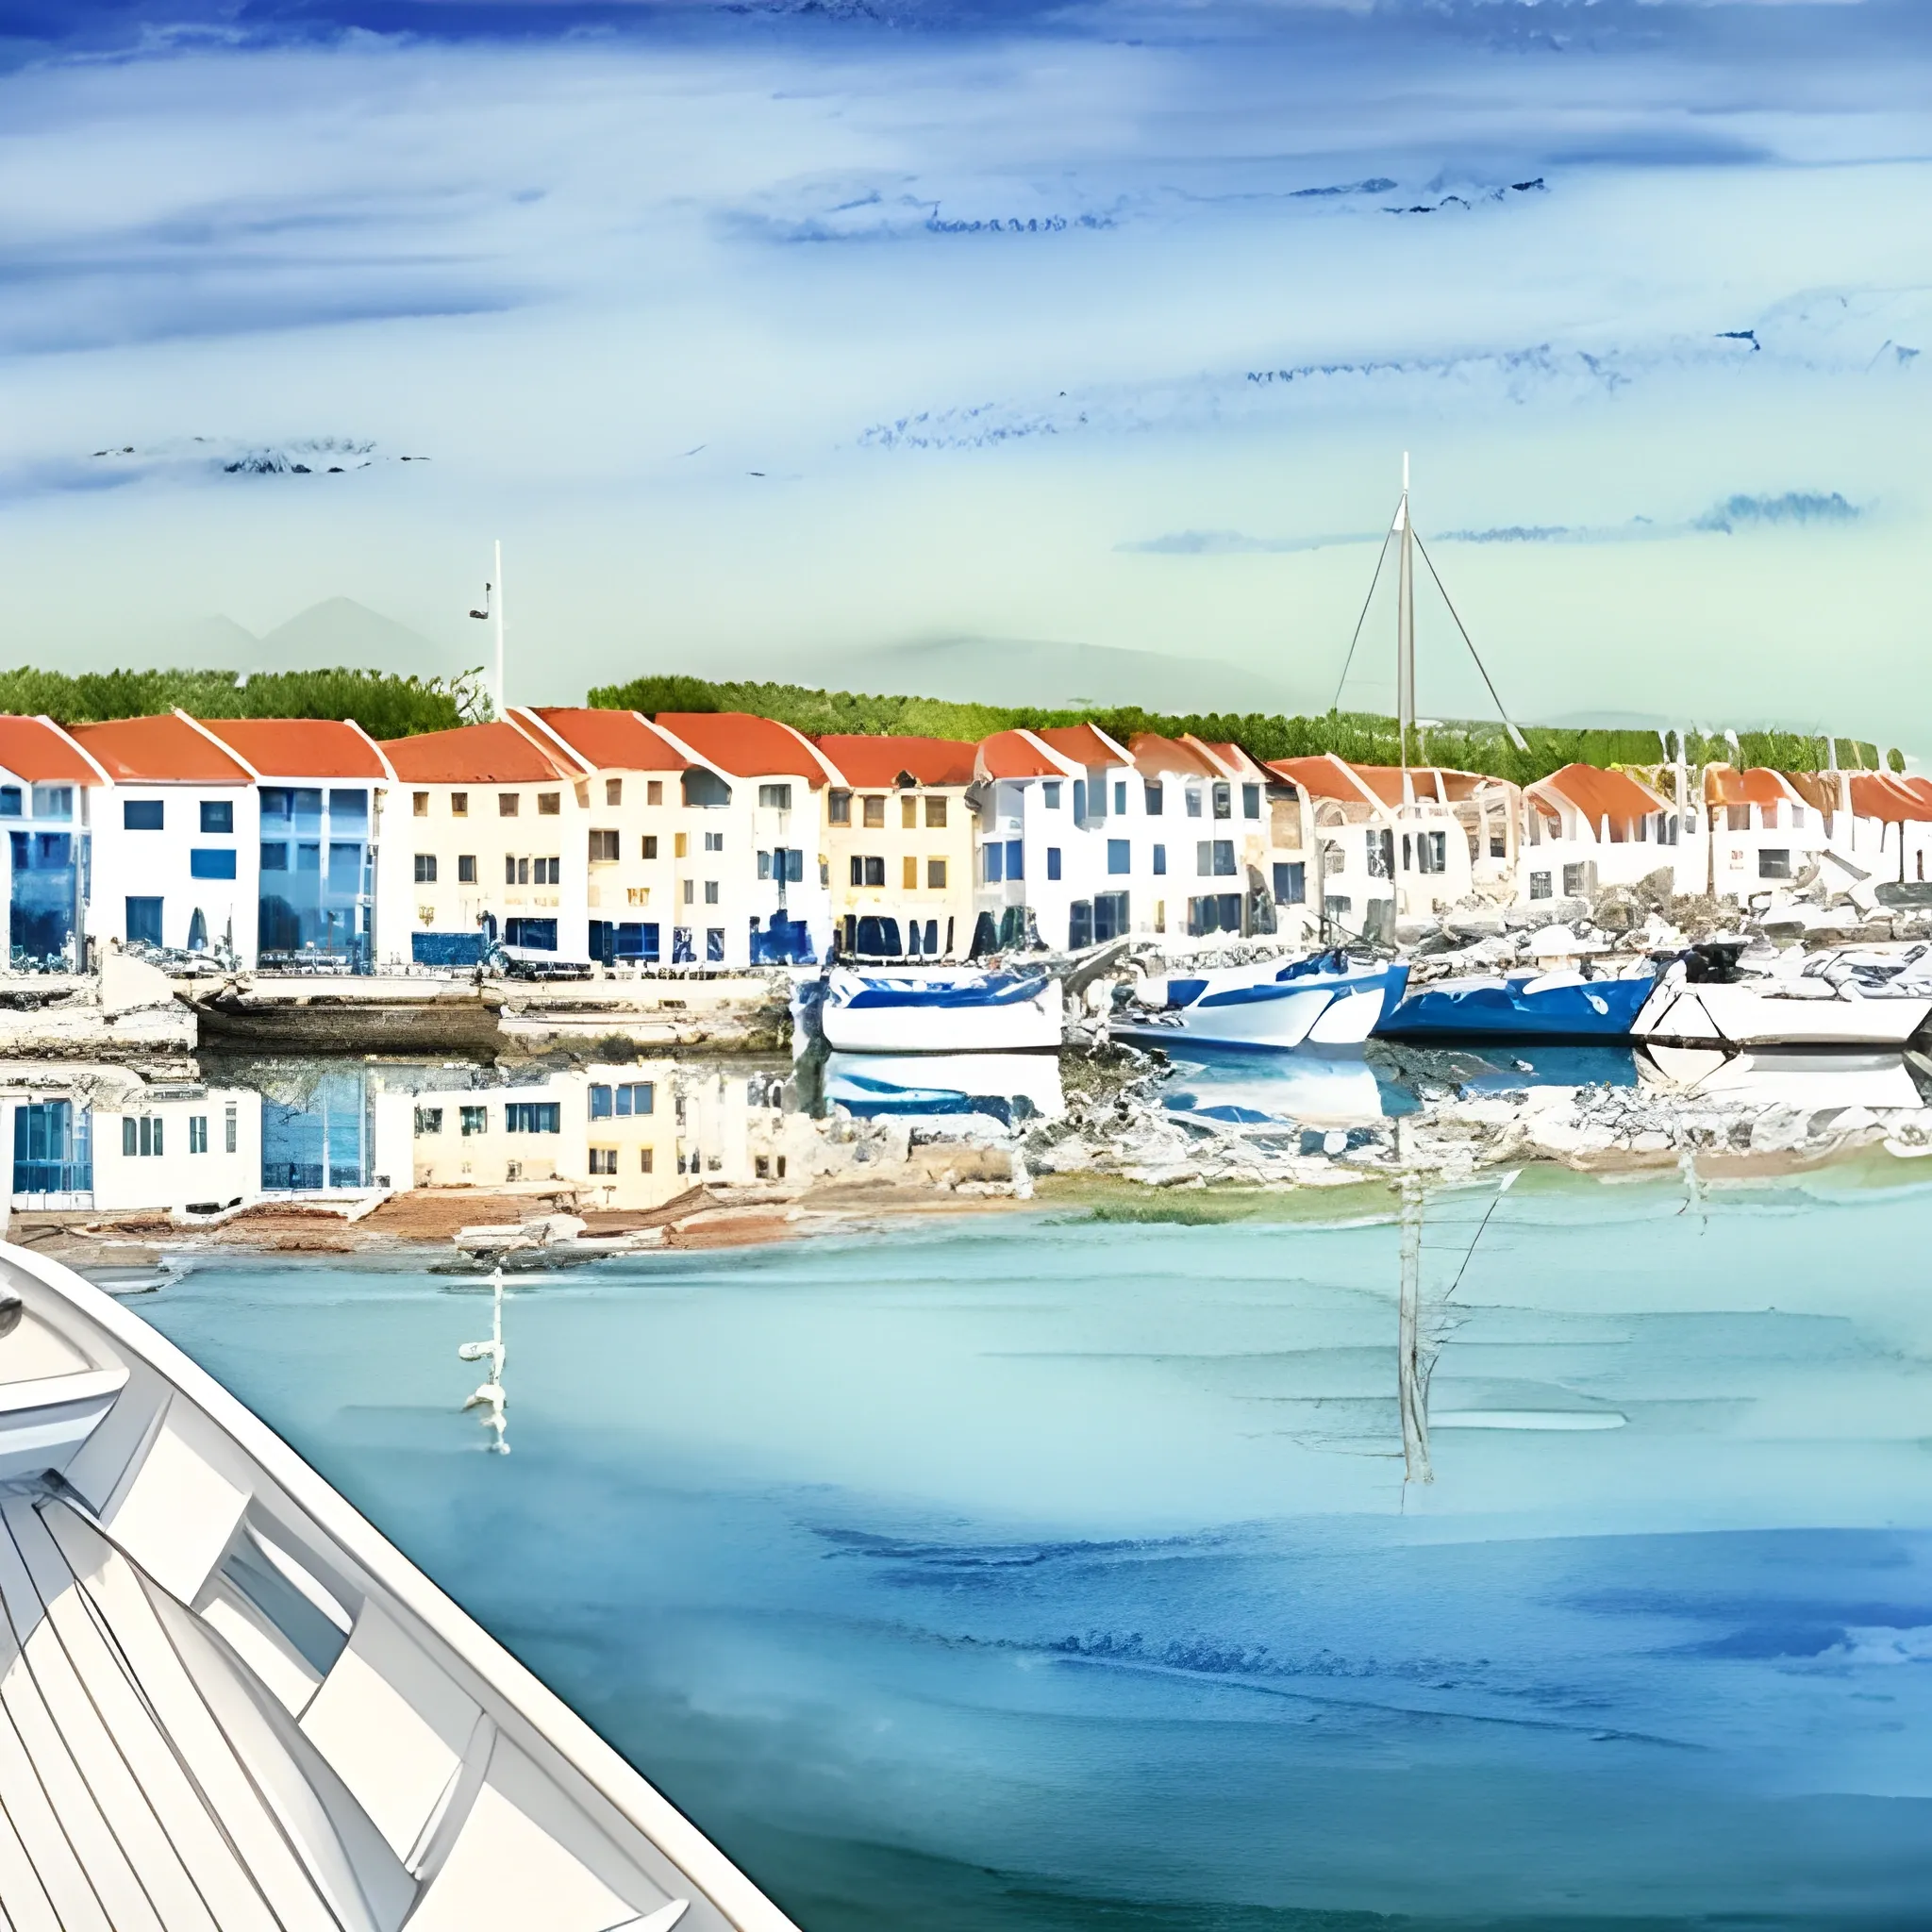 marina, one boat, reflection, horizon, shore, white houses, fisherman, Water Color